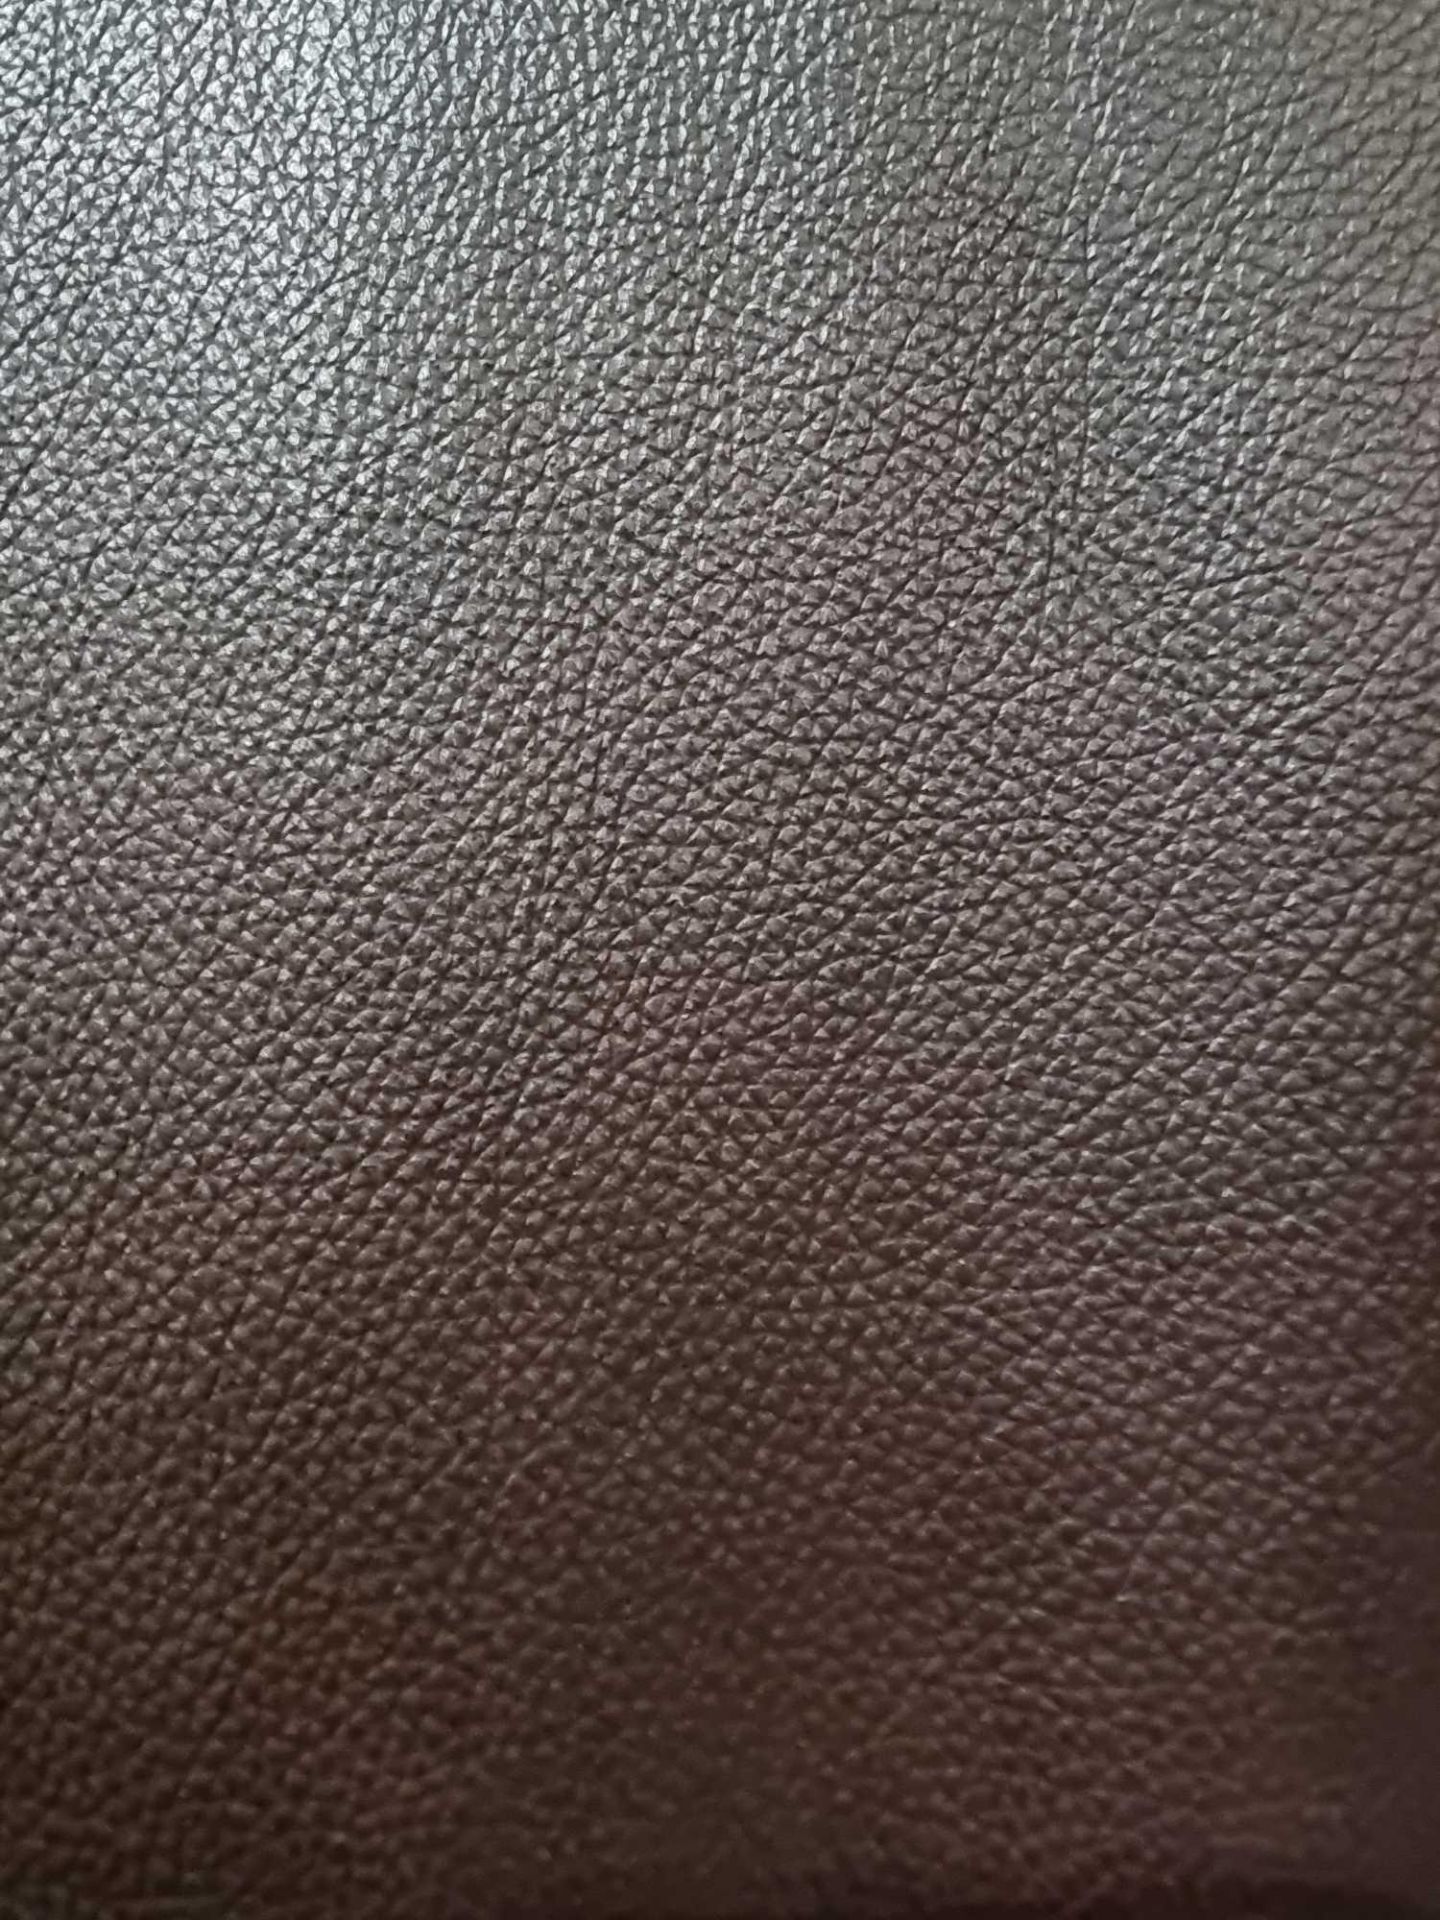 Mastrotto Hudson Chocolate Leather Hide approximately 3.51mÂ² 1.95 x 1.8cm ( Hide No,261) - Bild 2 aus 2